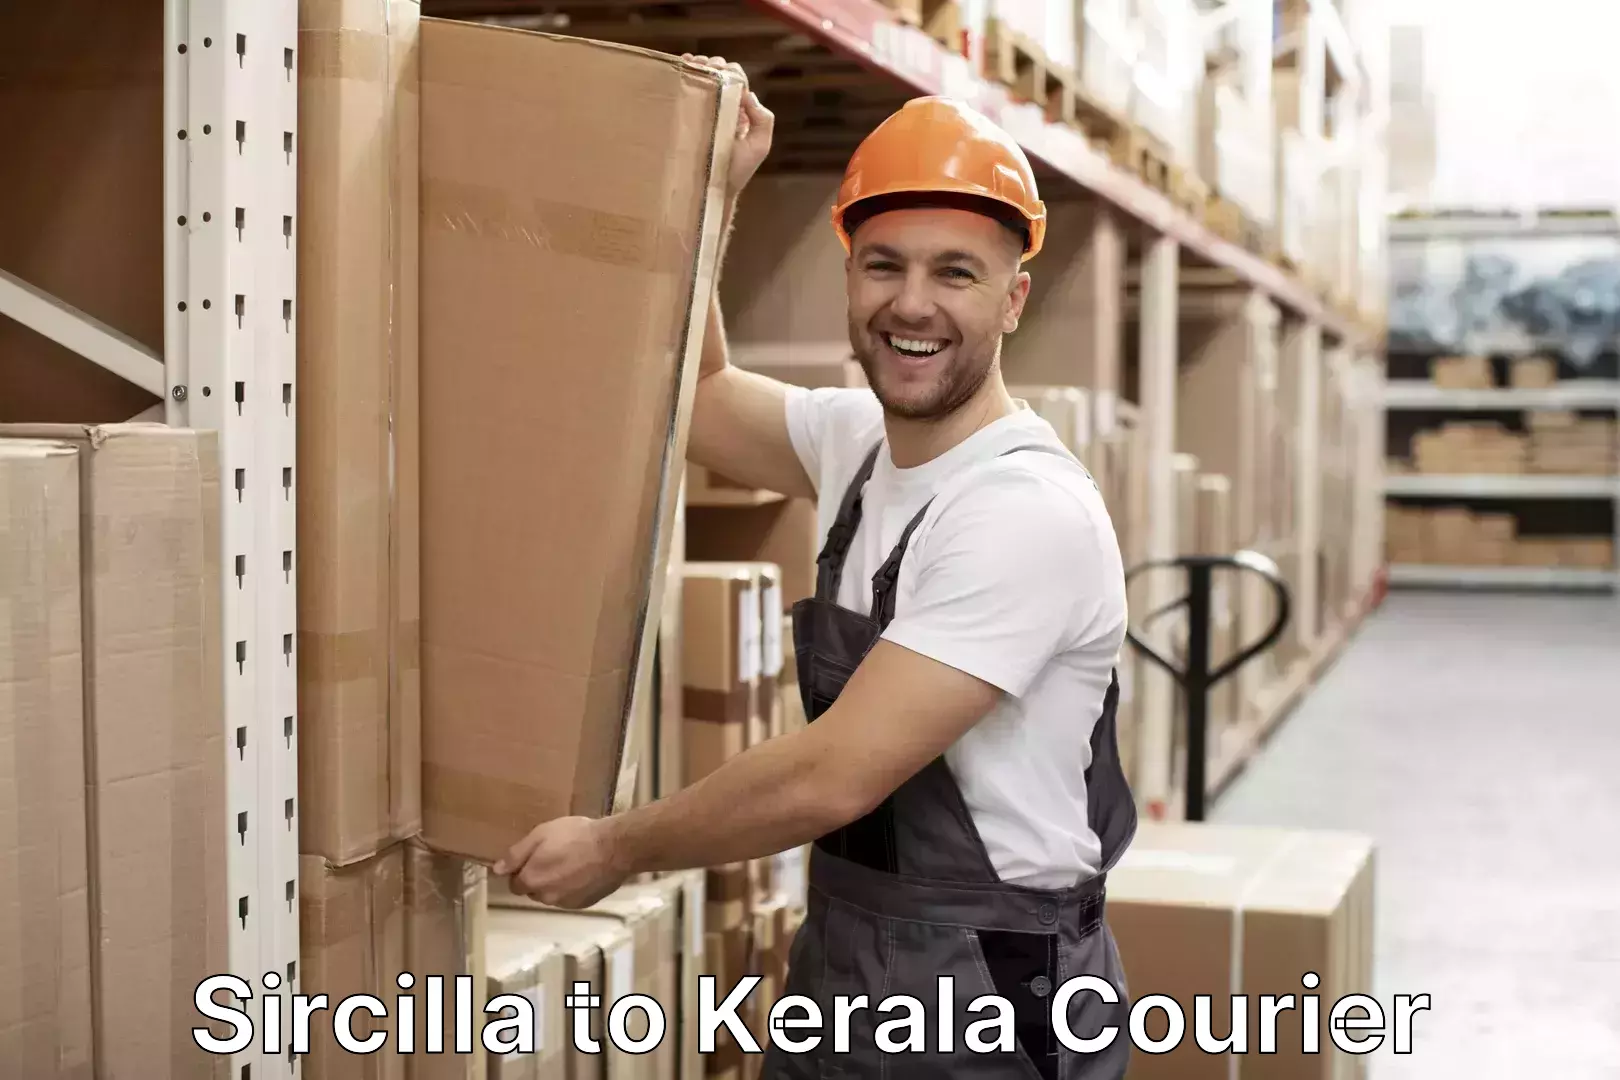 Luggage transport consultancy Sircilla to Kerala